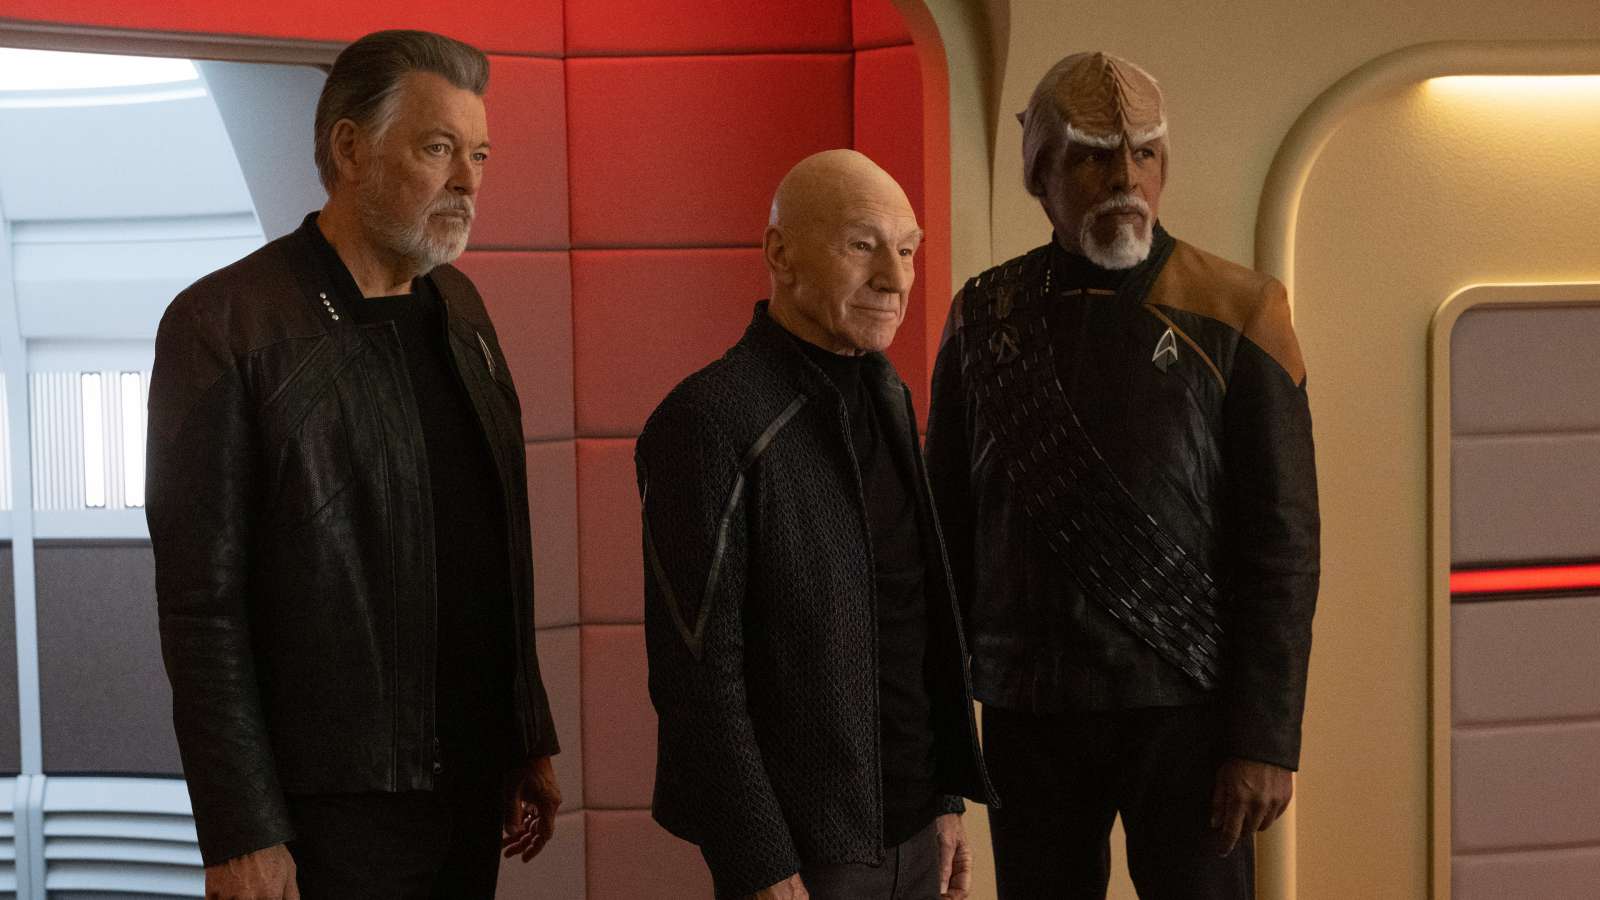 Star Trek: Picard : The Last Generation